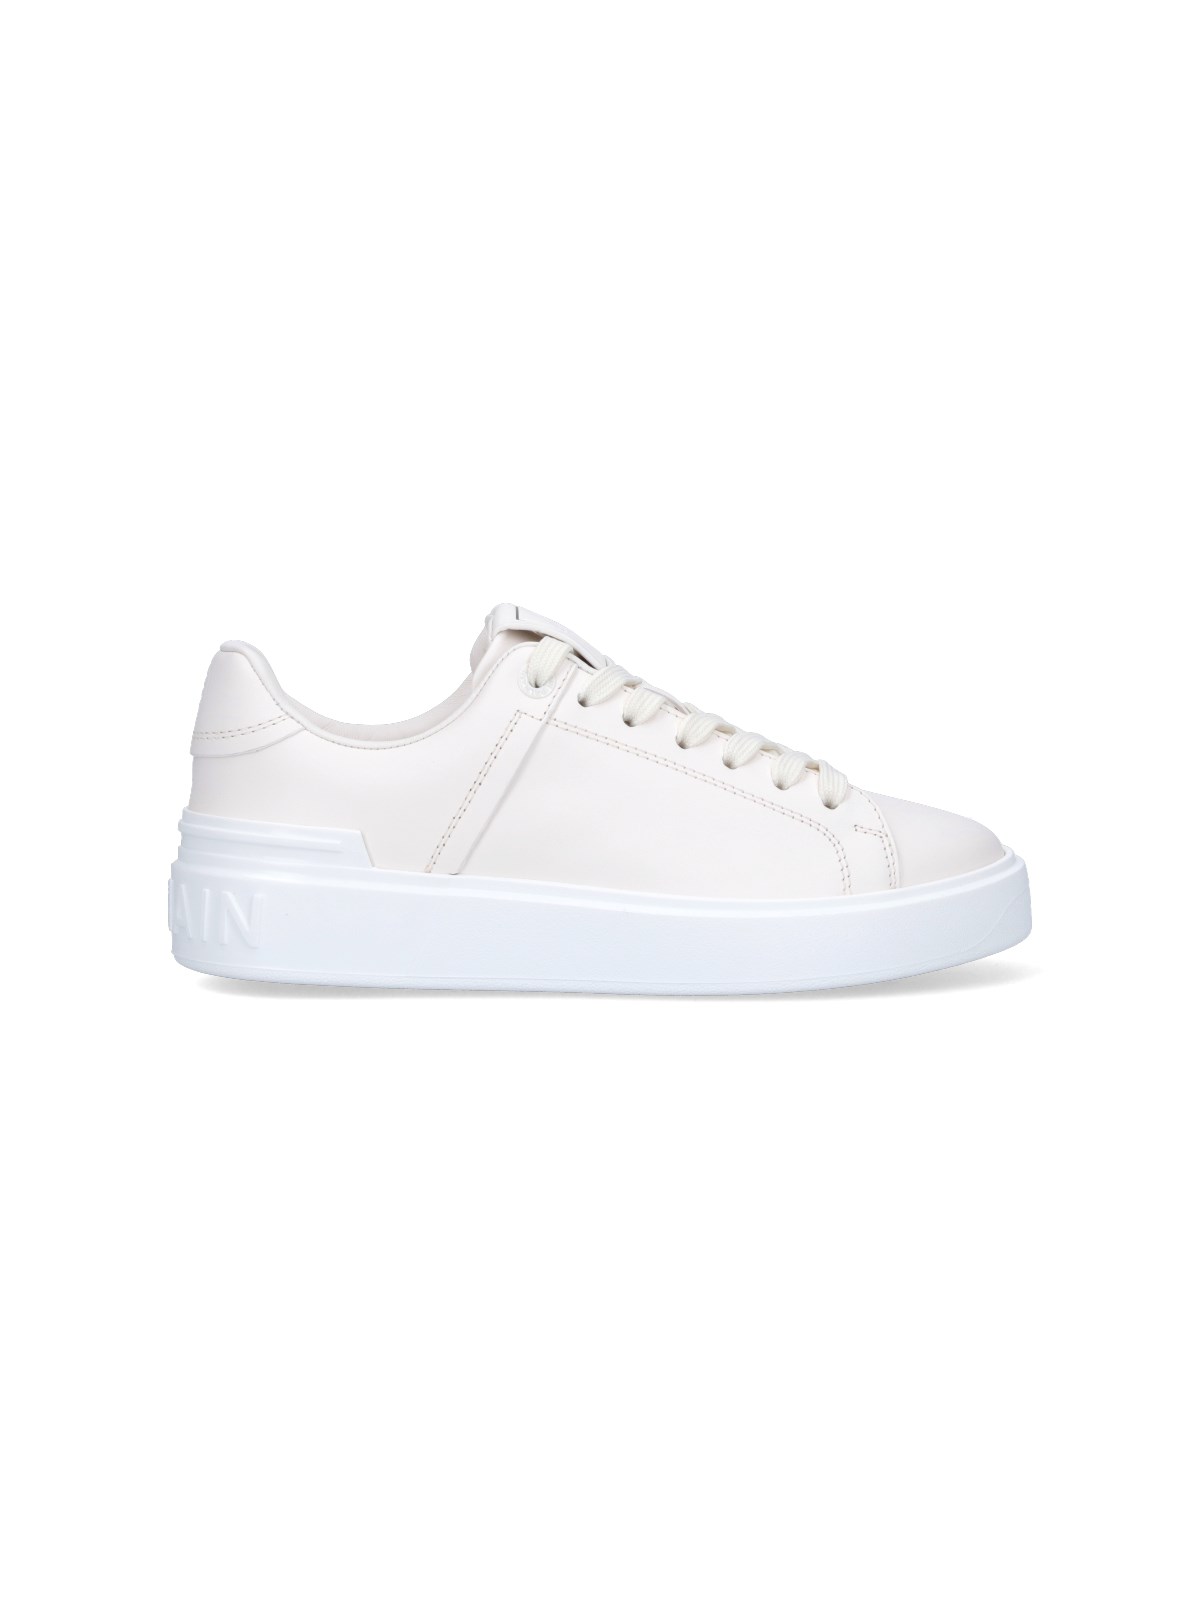 Balmain "b-court" Sneakers In White